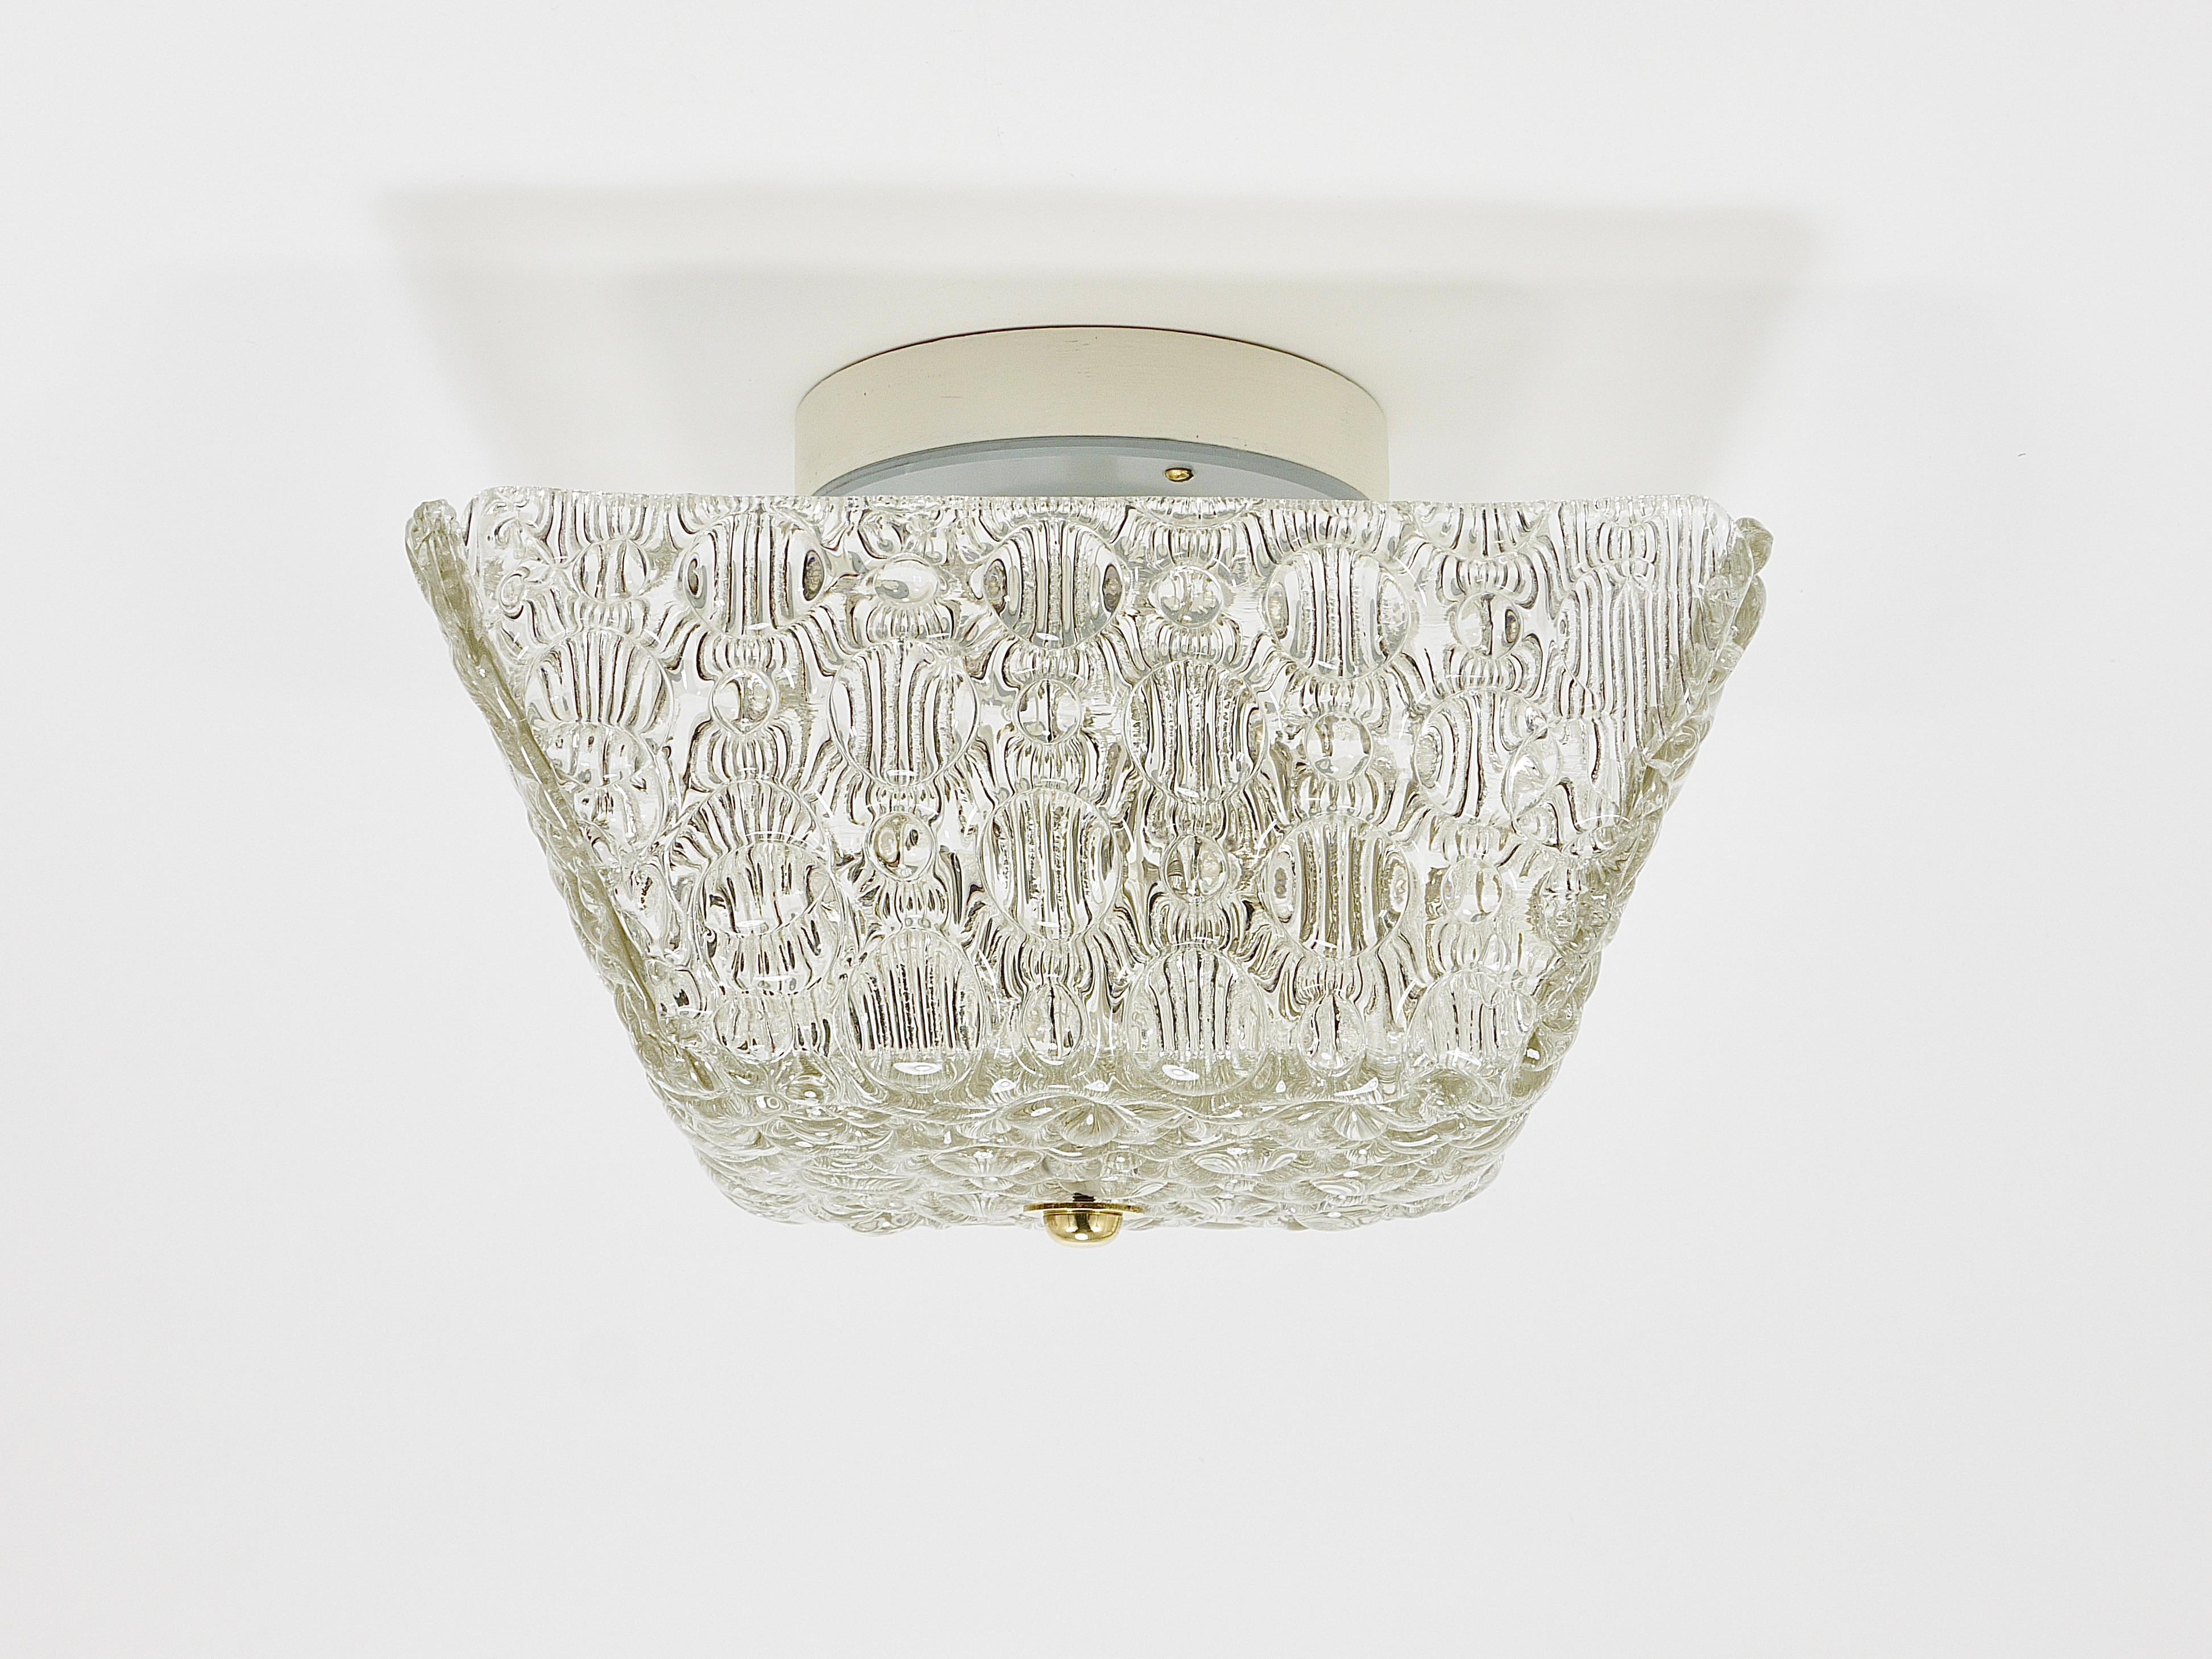 J.T Kalmar Square Brass & Textured Glass Flush Mount Ceiling Light, 1950s For Sale 2